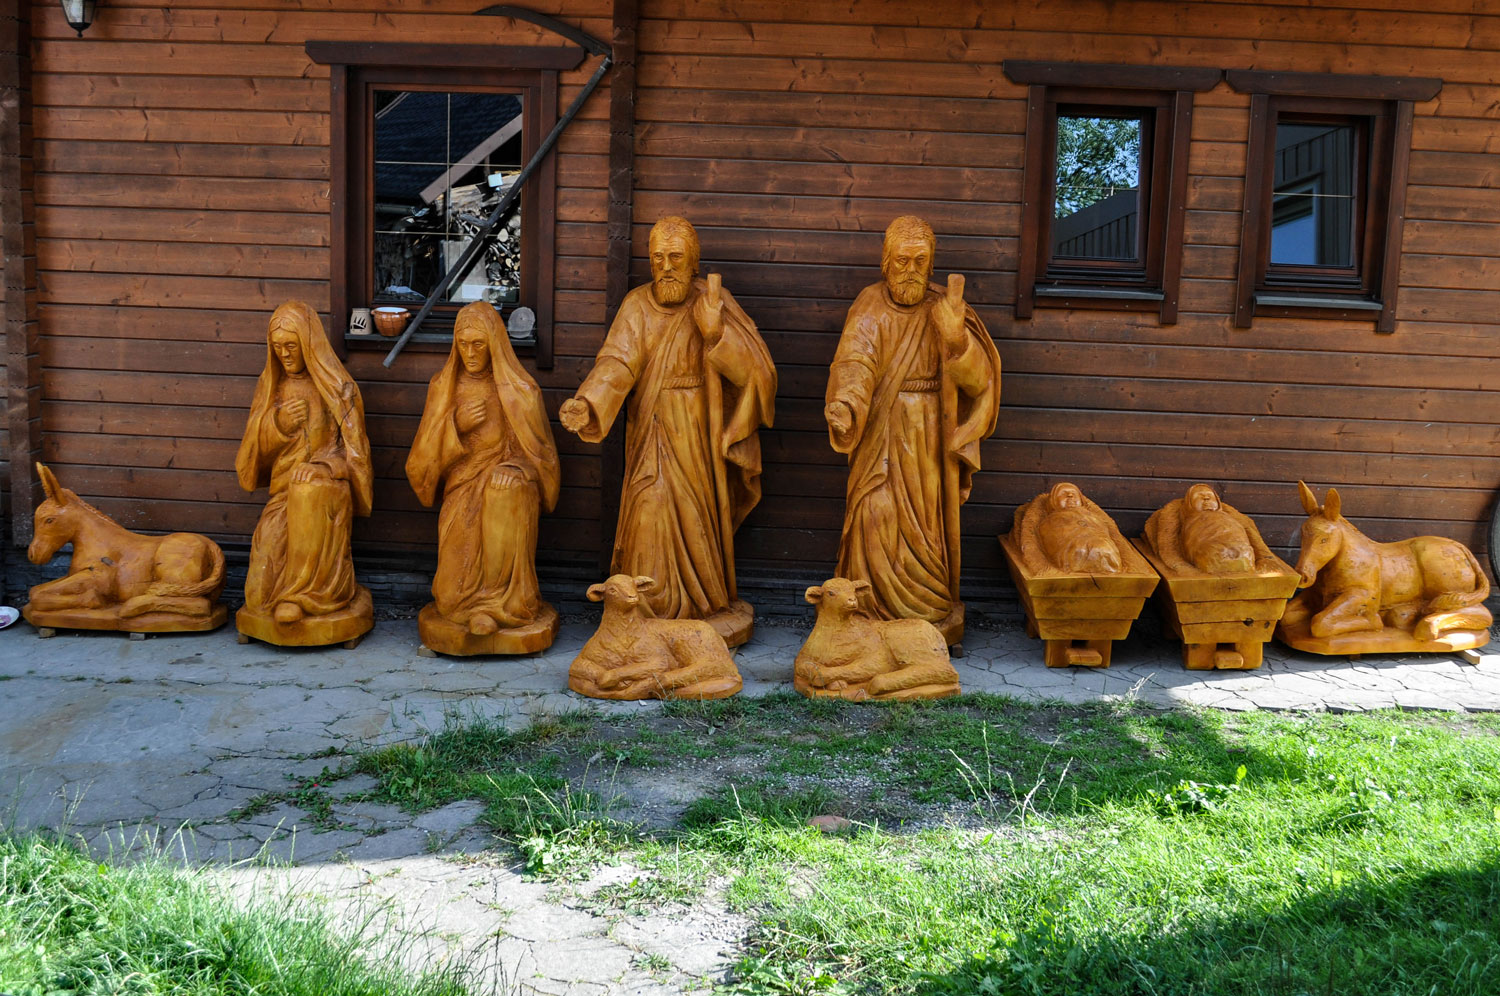 drevorezba-vyrezavani-carving-wood-drevo-socha-figura-betlem-radekzdrazil-20230725-01